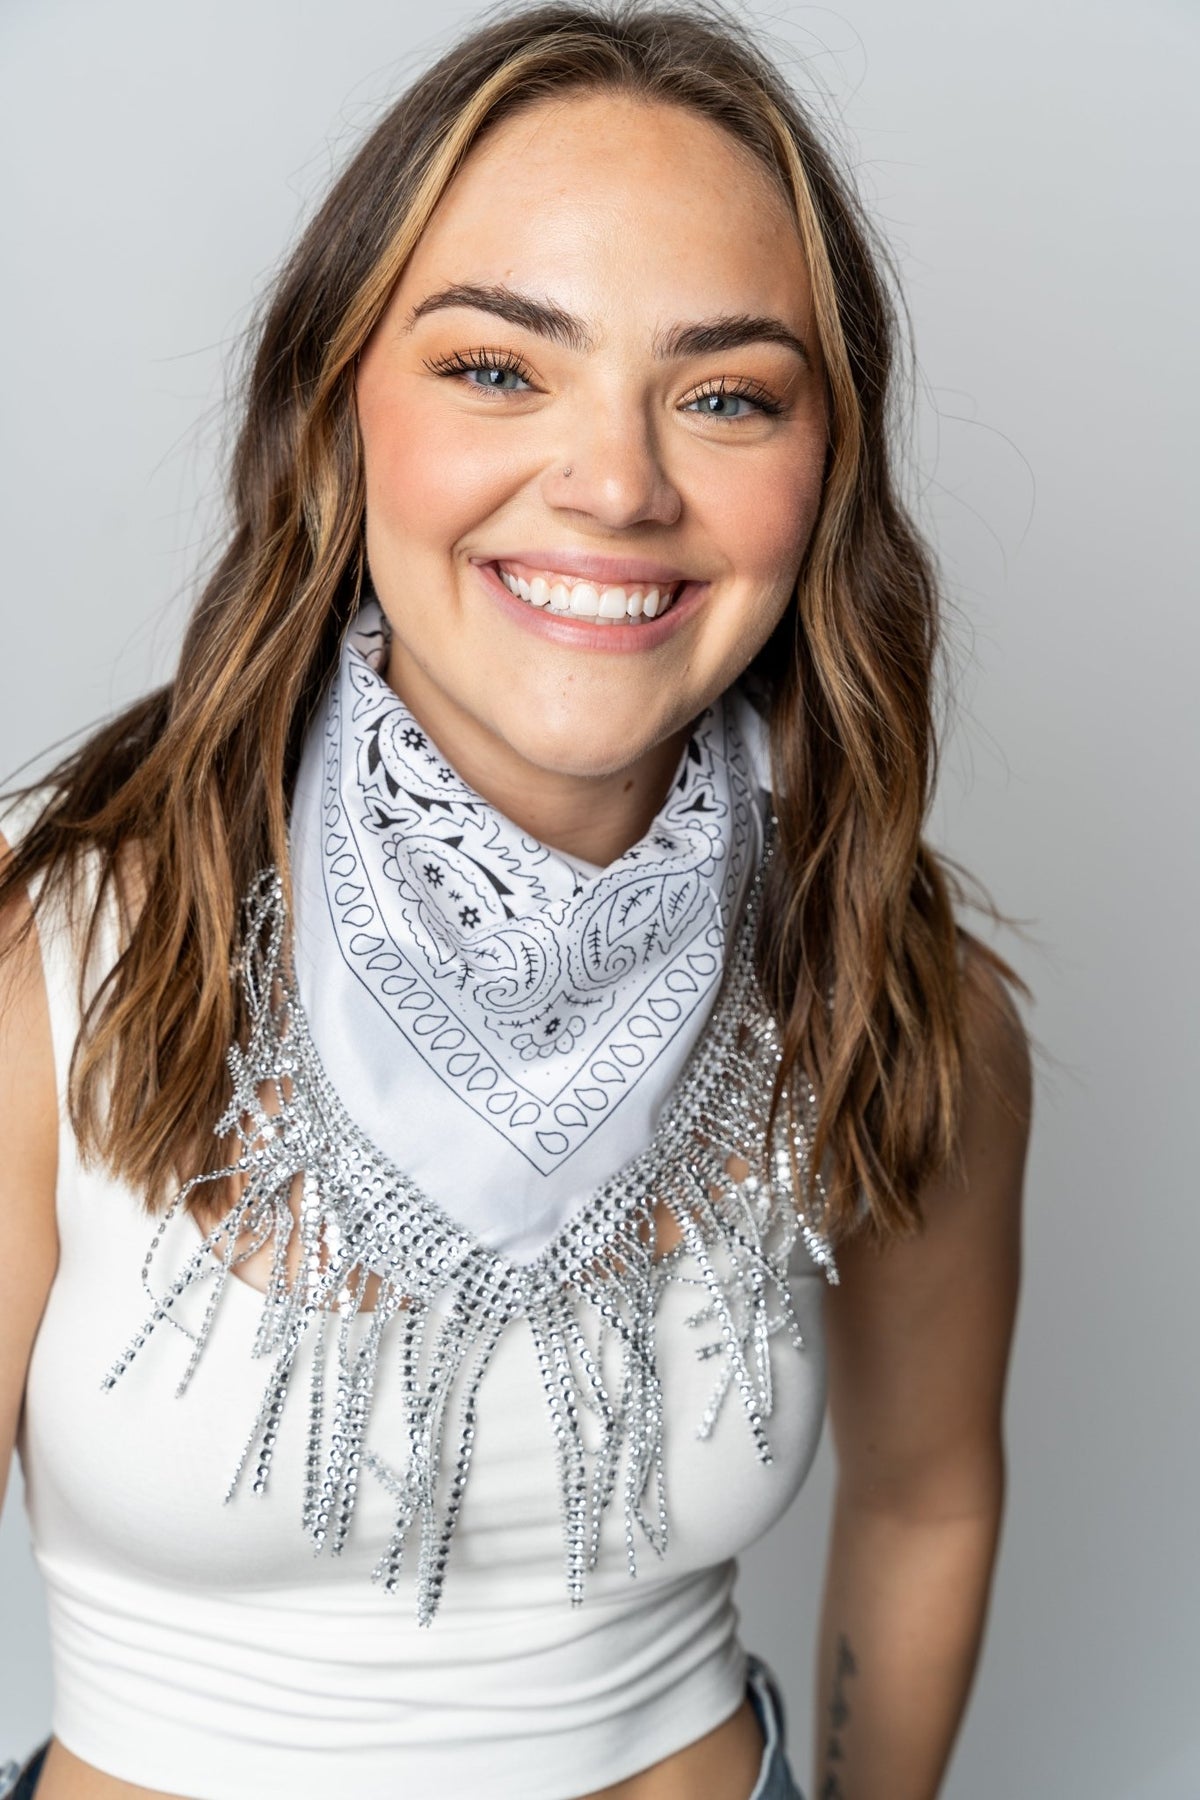 Paisley rhinestone bandana scarf white - Trendy Scarves at Lush Fashion Lounge Boutique in Oklahoma City